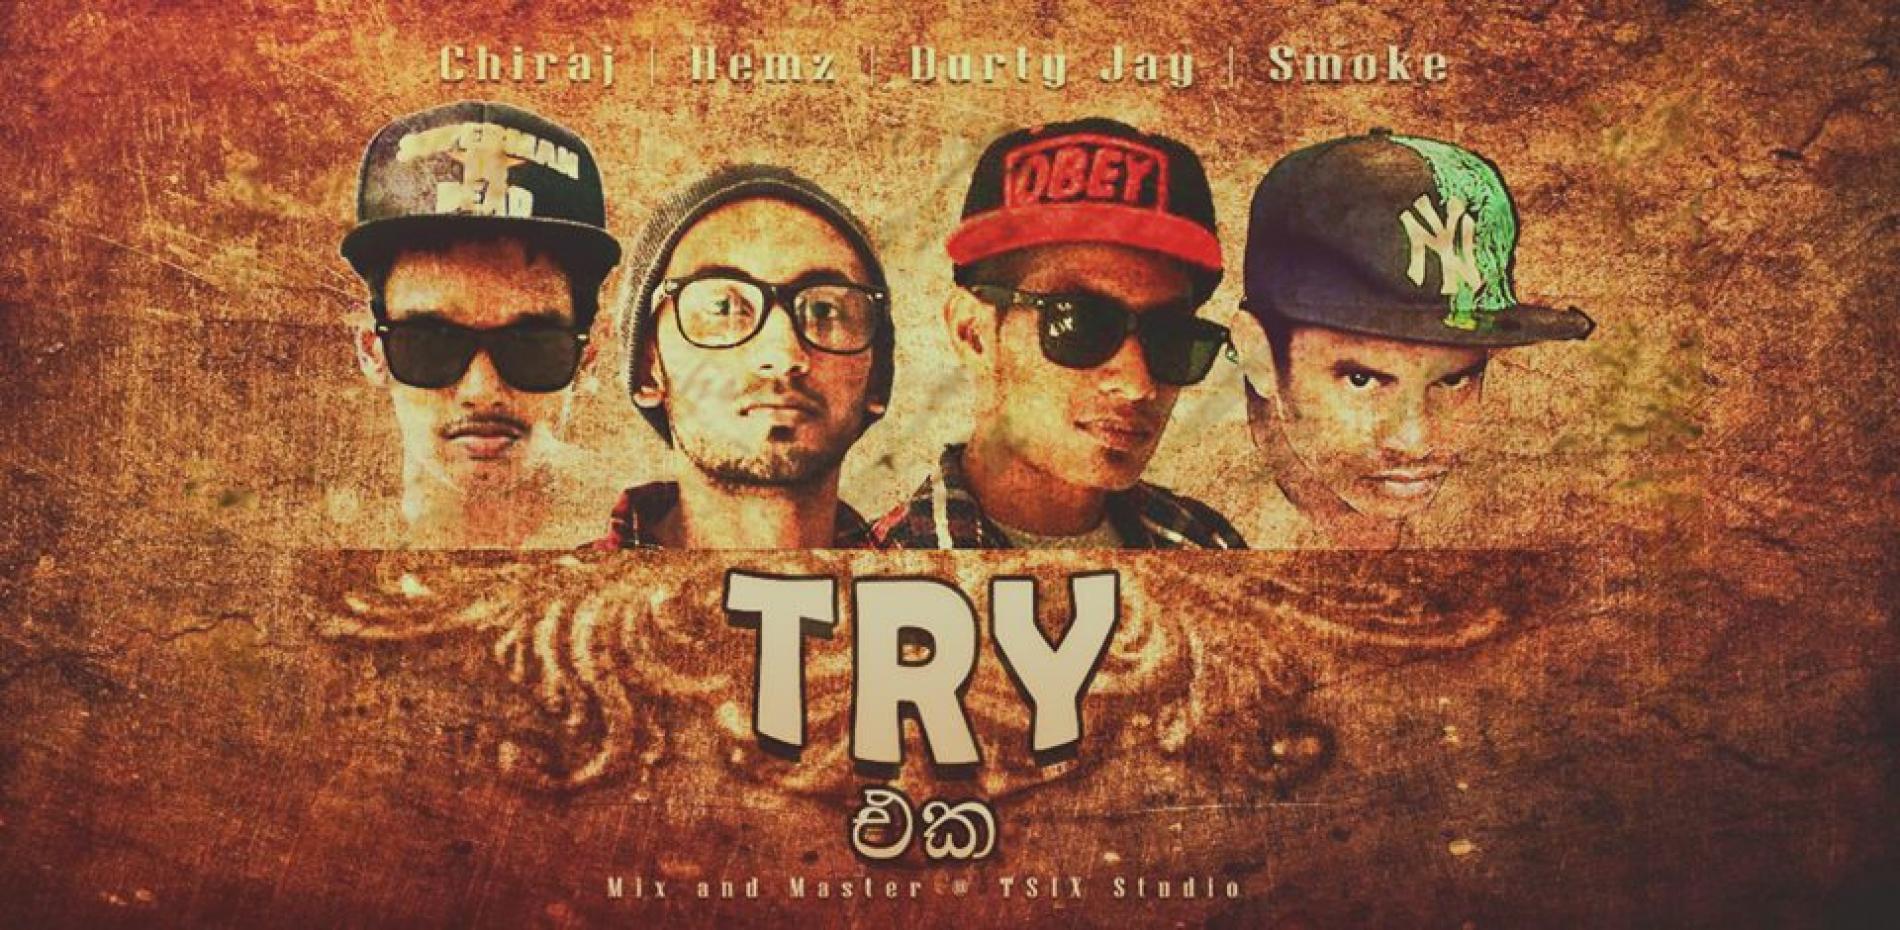 Durty Jay ft Chiraj & Smoke: “Try එක” [Mixtape]